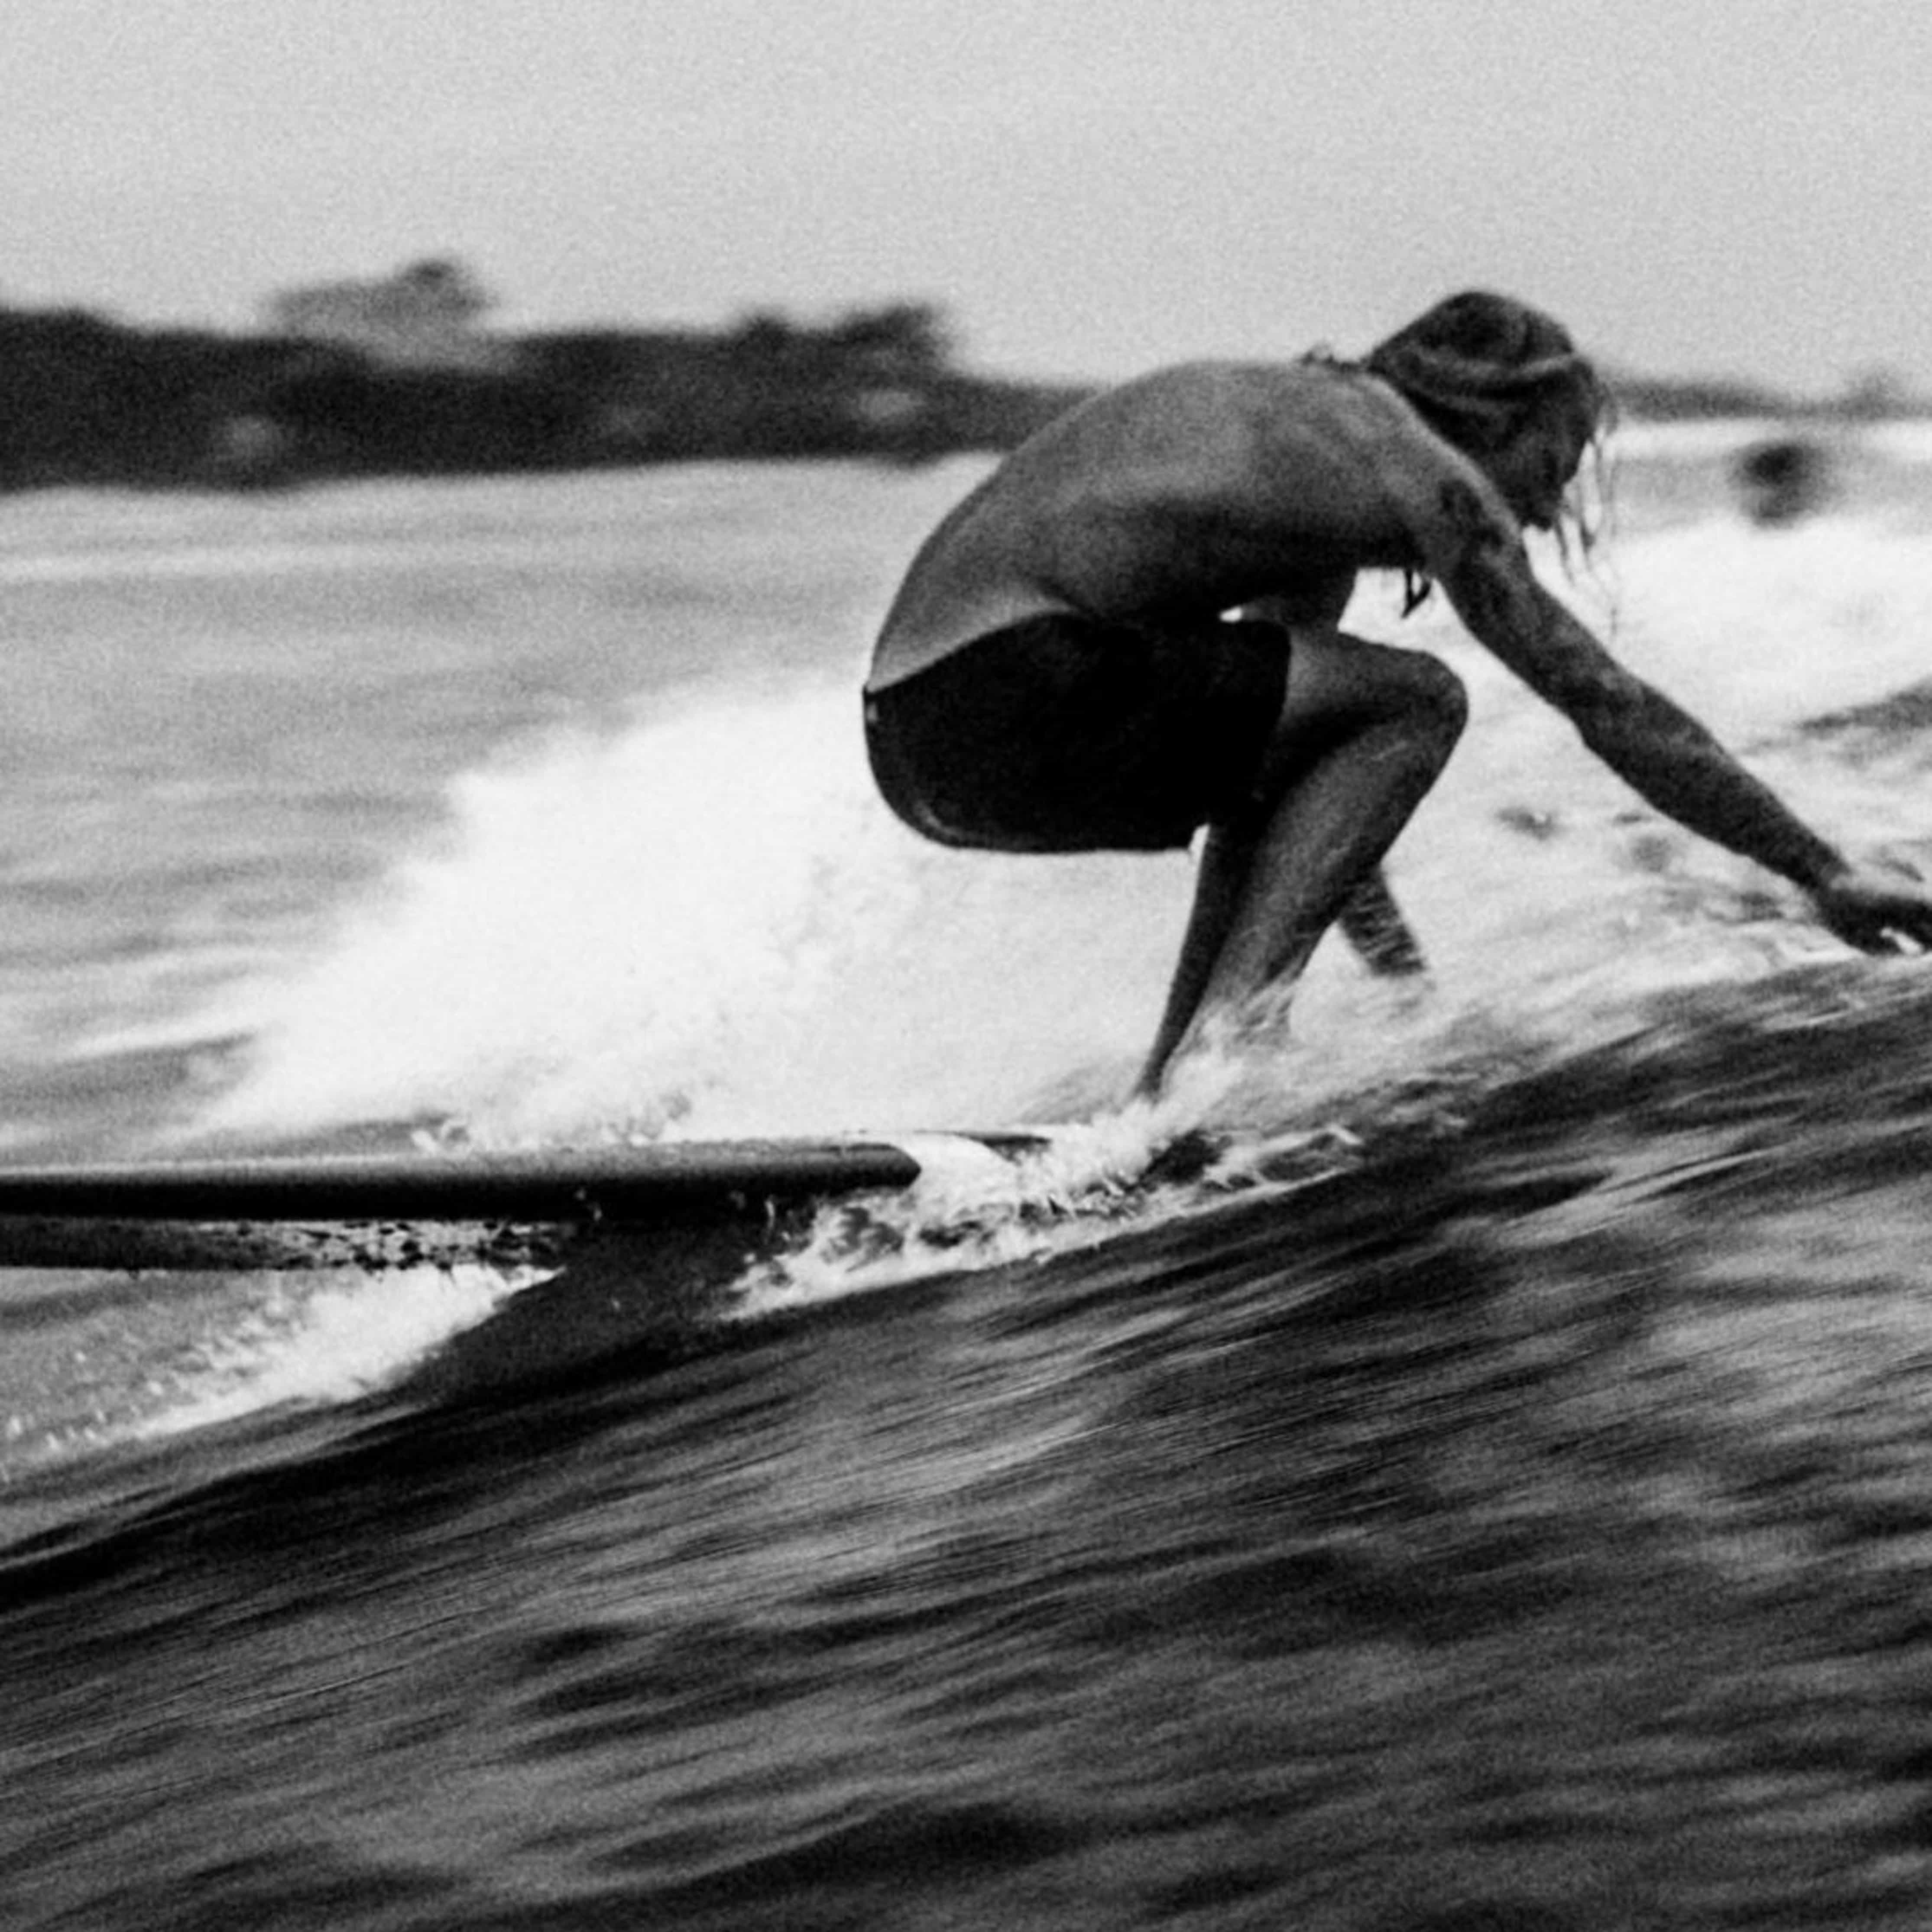 Dylan-Swindale-Surfing-Backwards